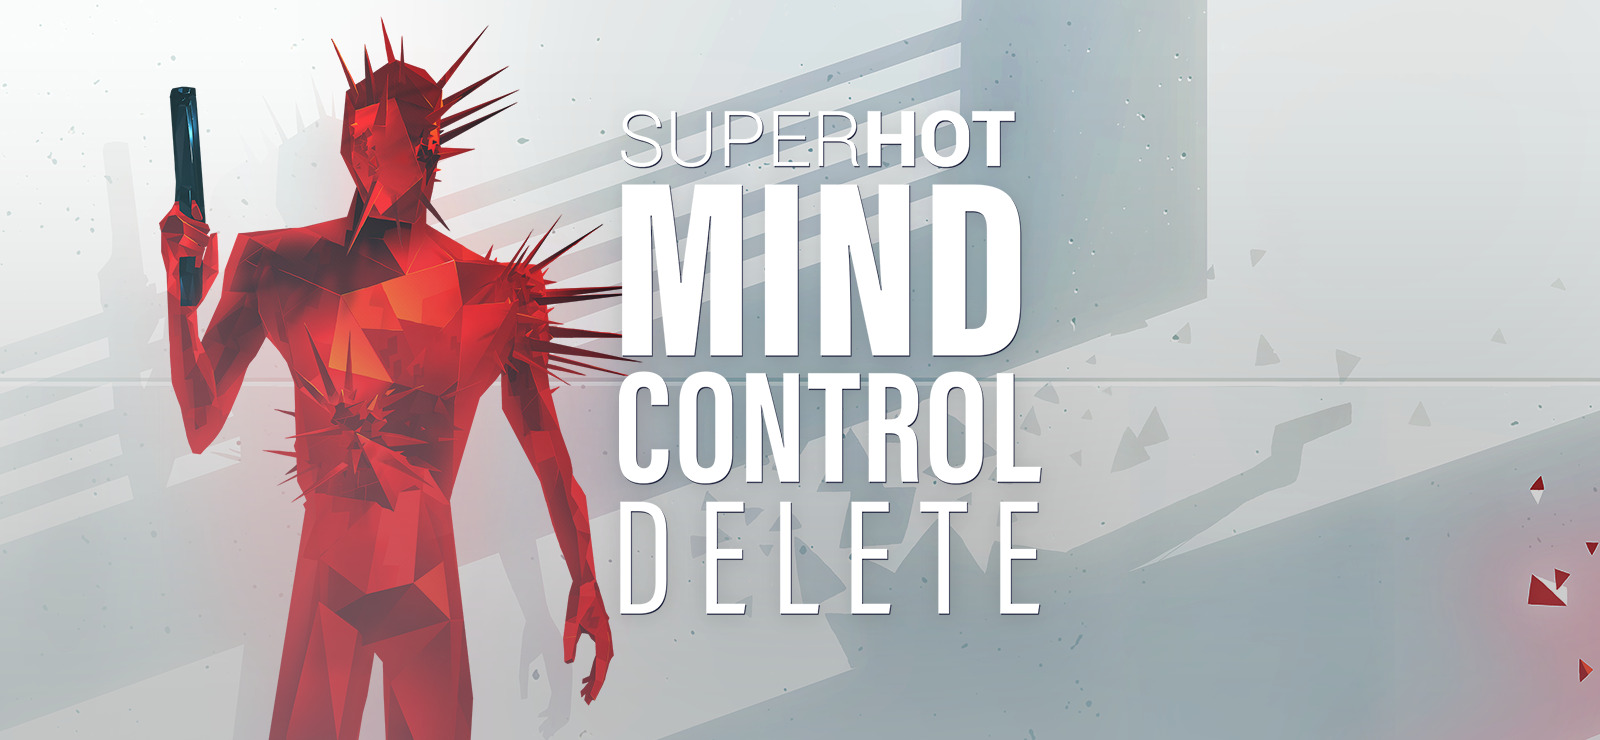 superhot mind control delete 7.0.1m download